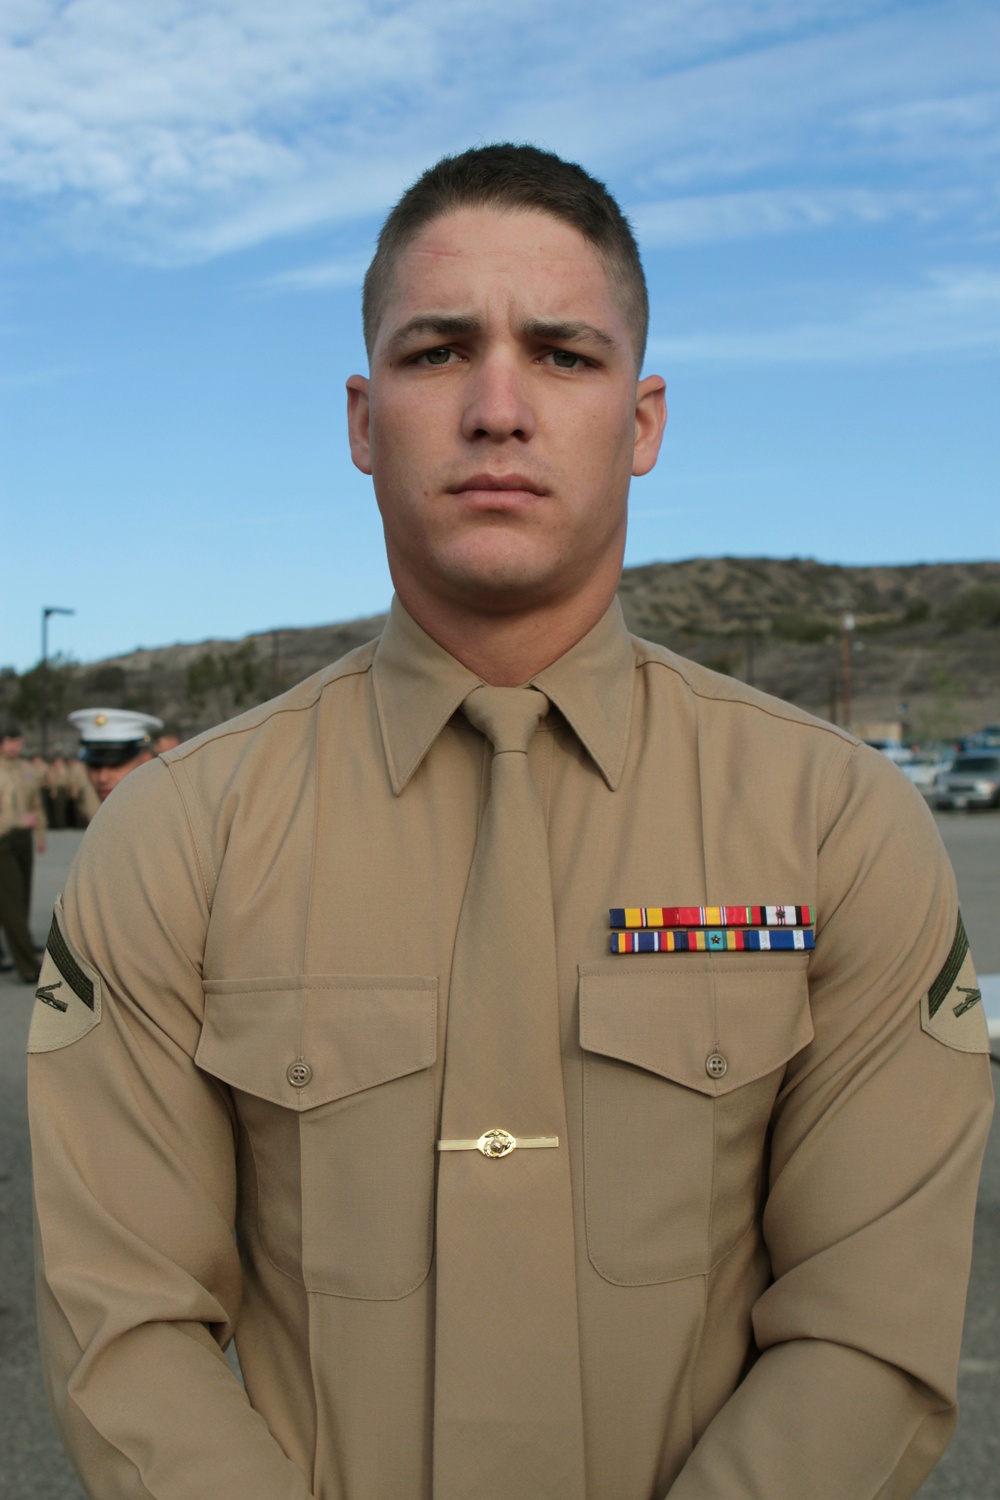 Auburn native, U.S. Marine machine gun squad leader recognized as top leader in California infantry battalion